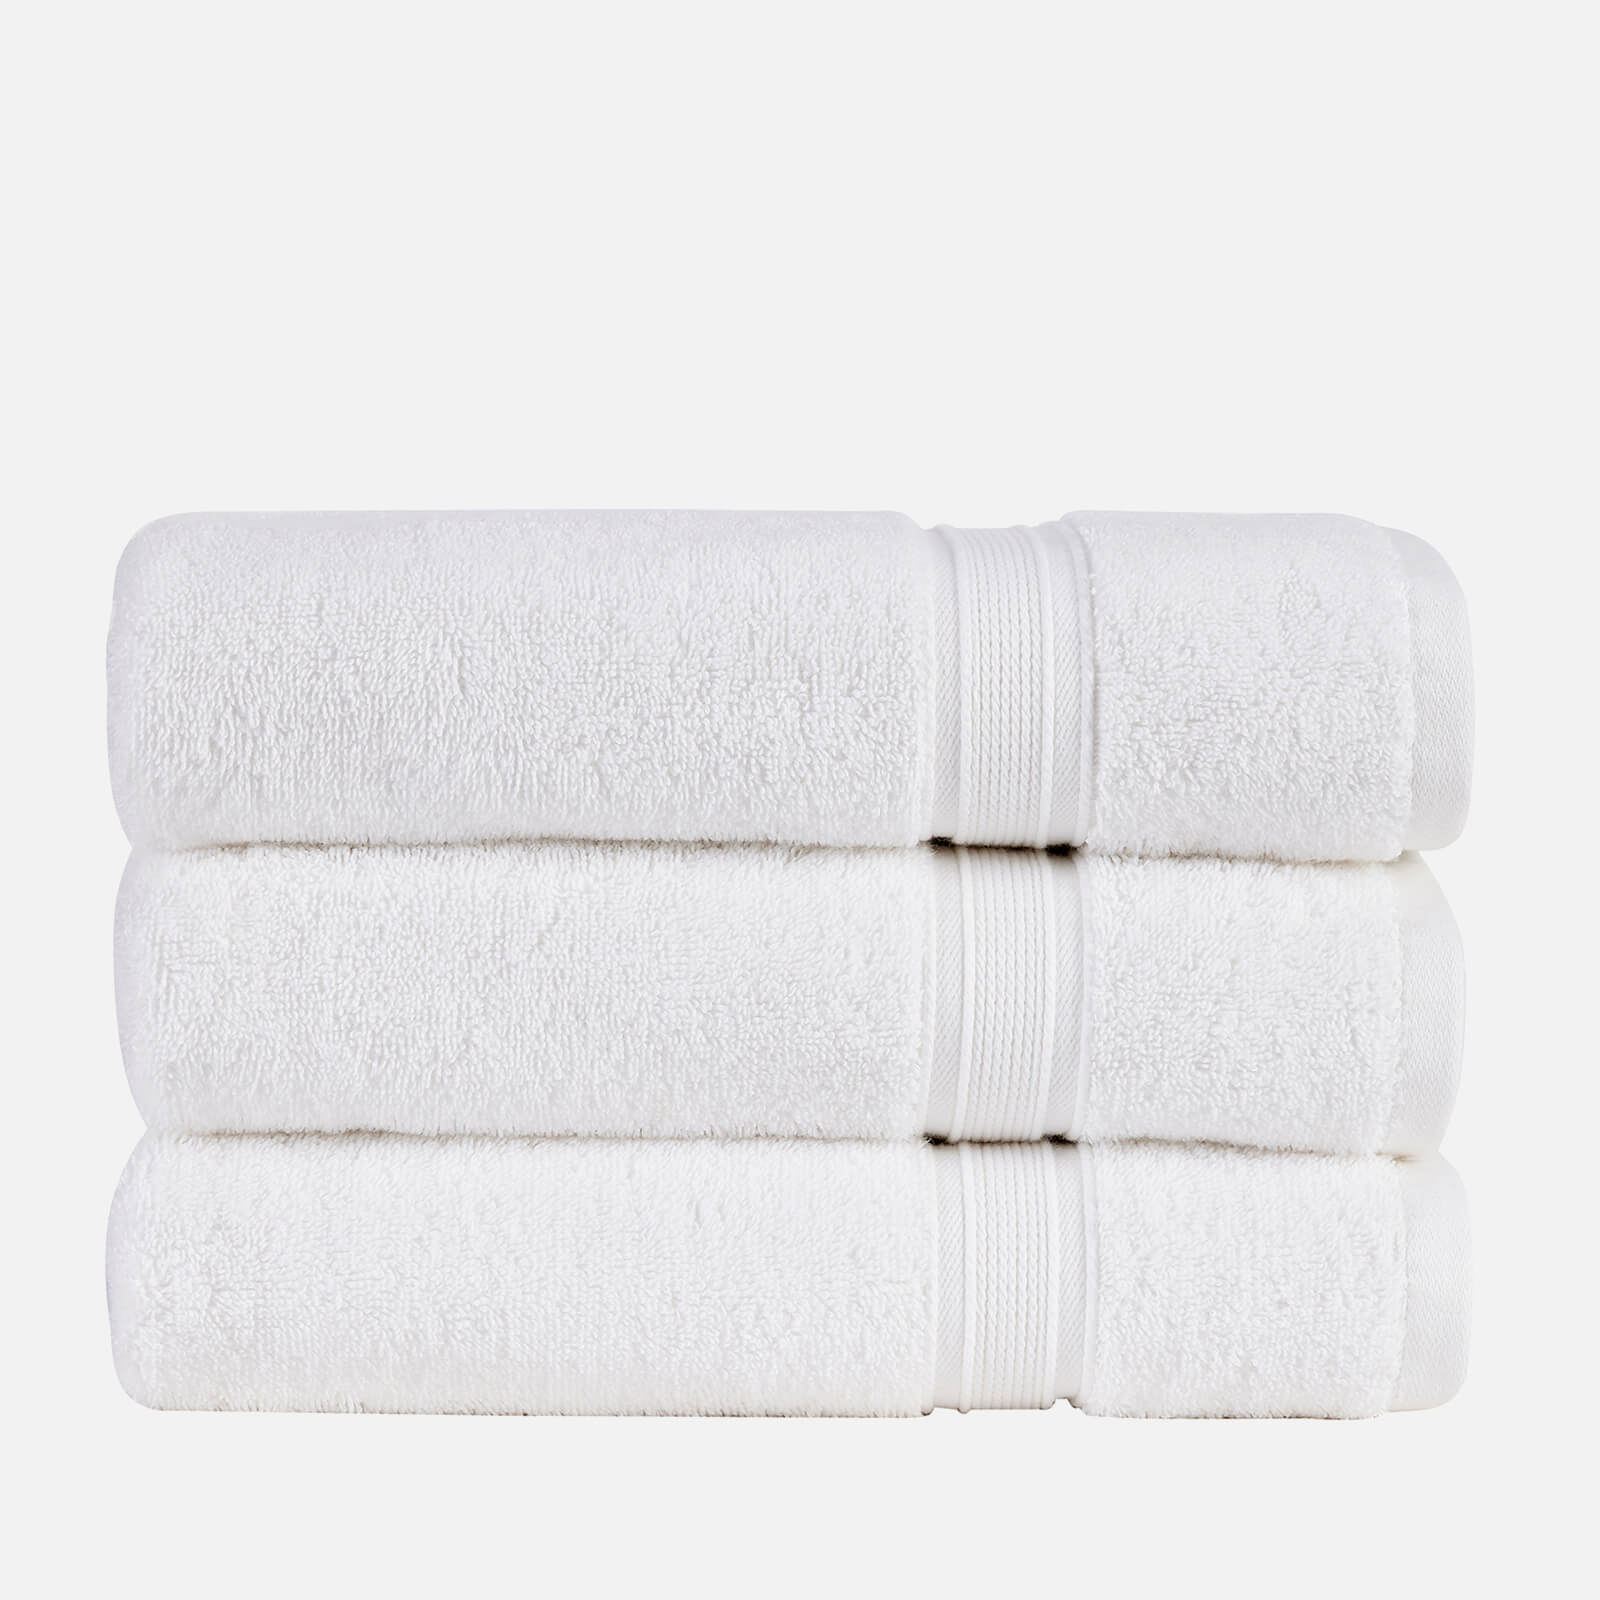 Christy Refresh Towel - White - Set of 2